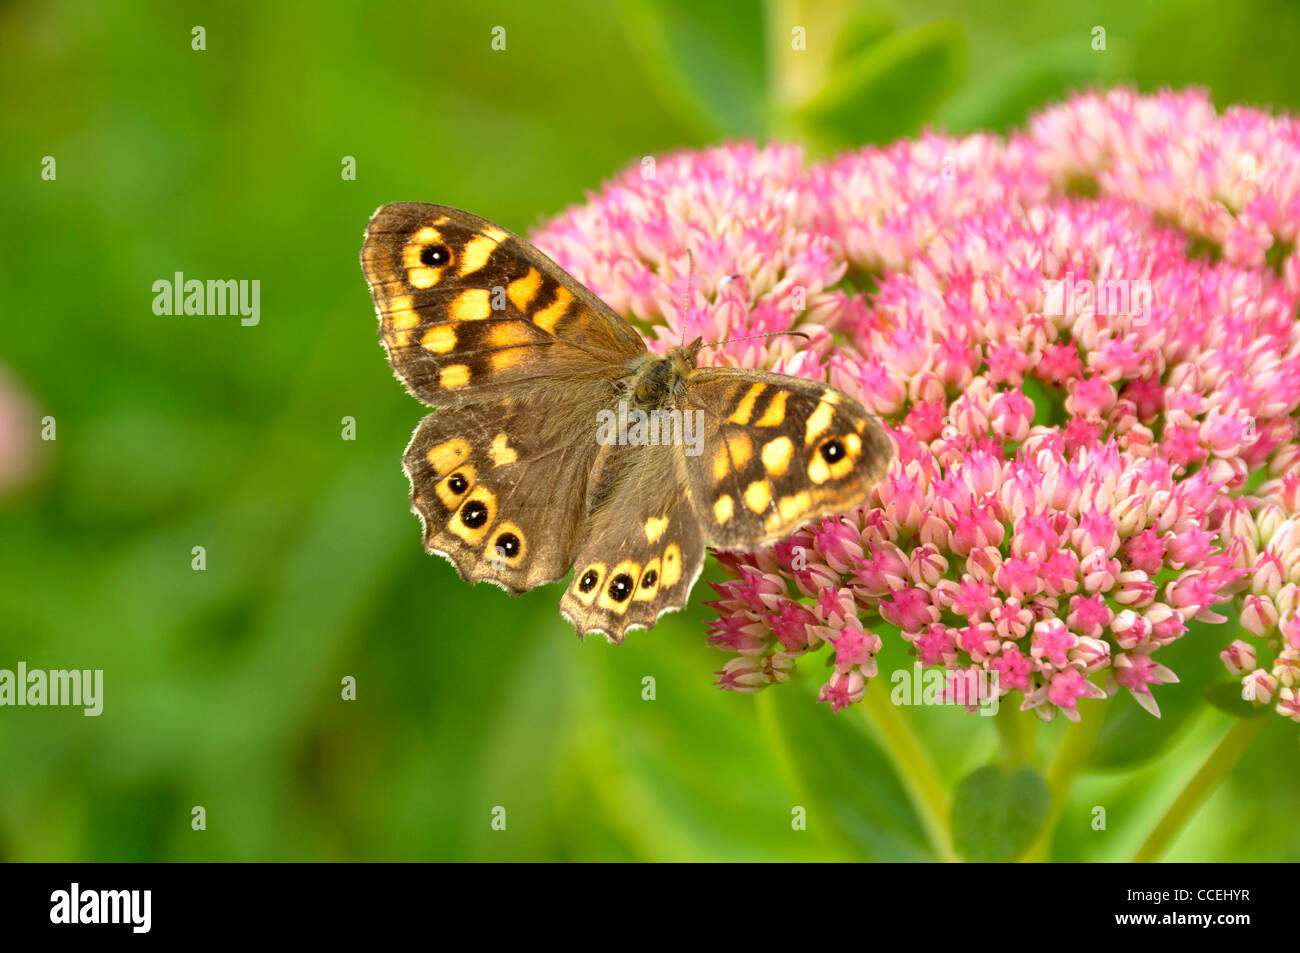 A butterfly (Speckled wood, Pararge aegeria) on a sedum flower (sedum spectabile). Stock Photo